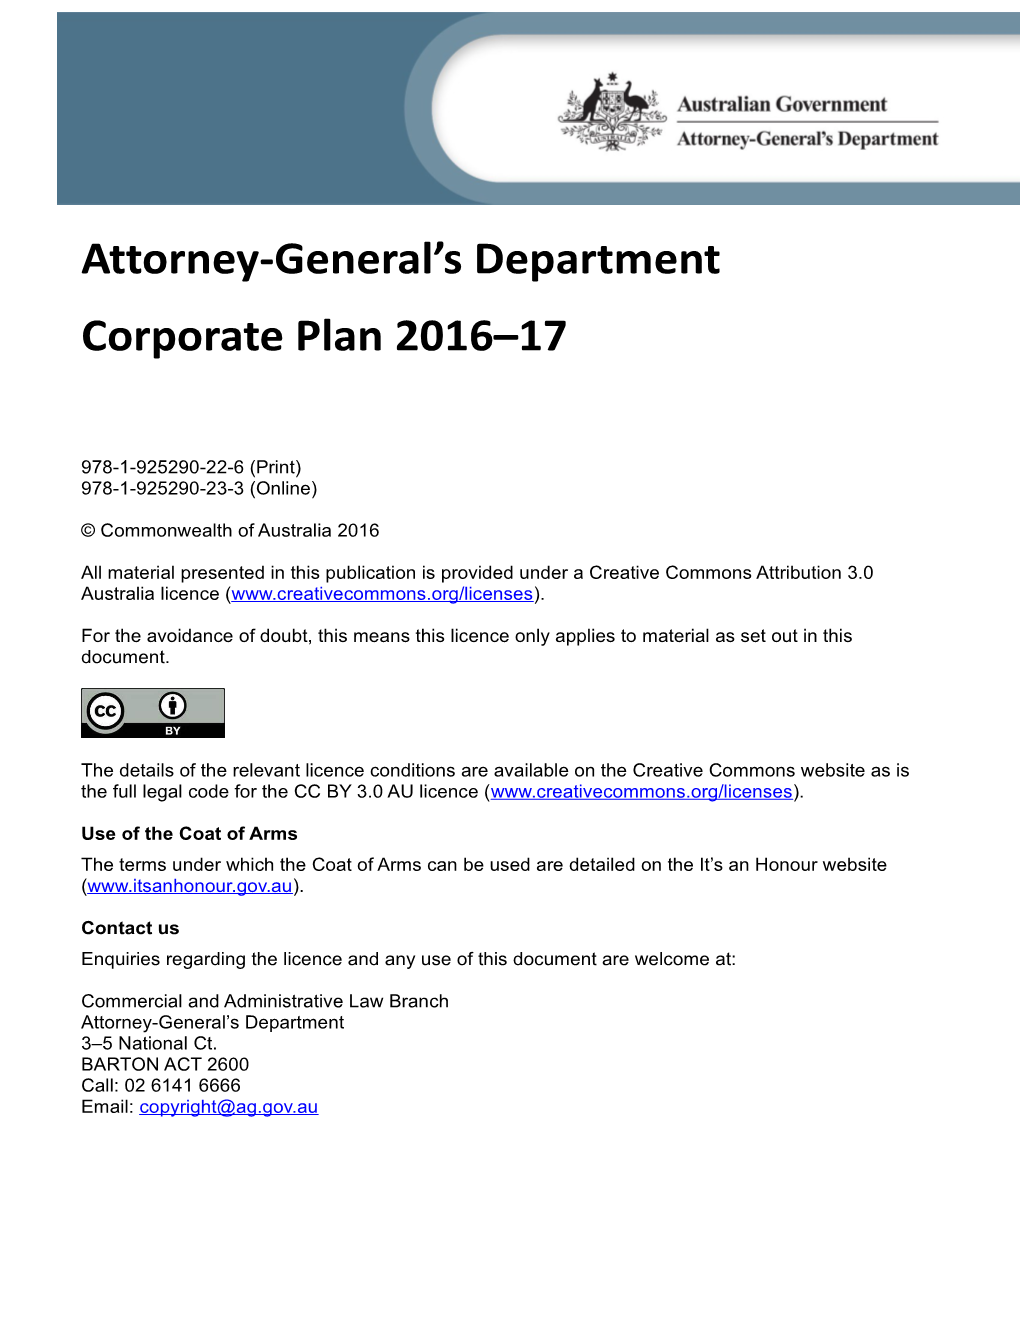 Attorney-General S Department Corporate Plan 2016-17